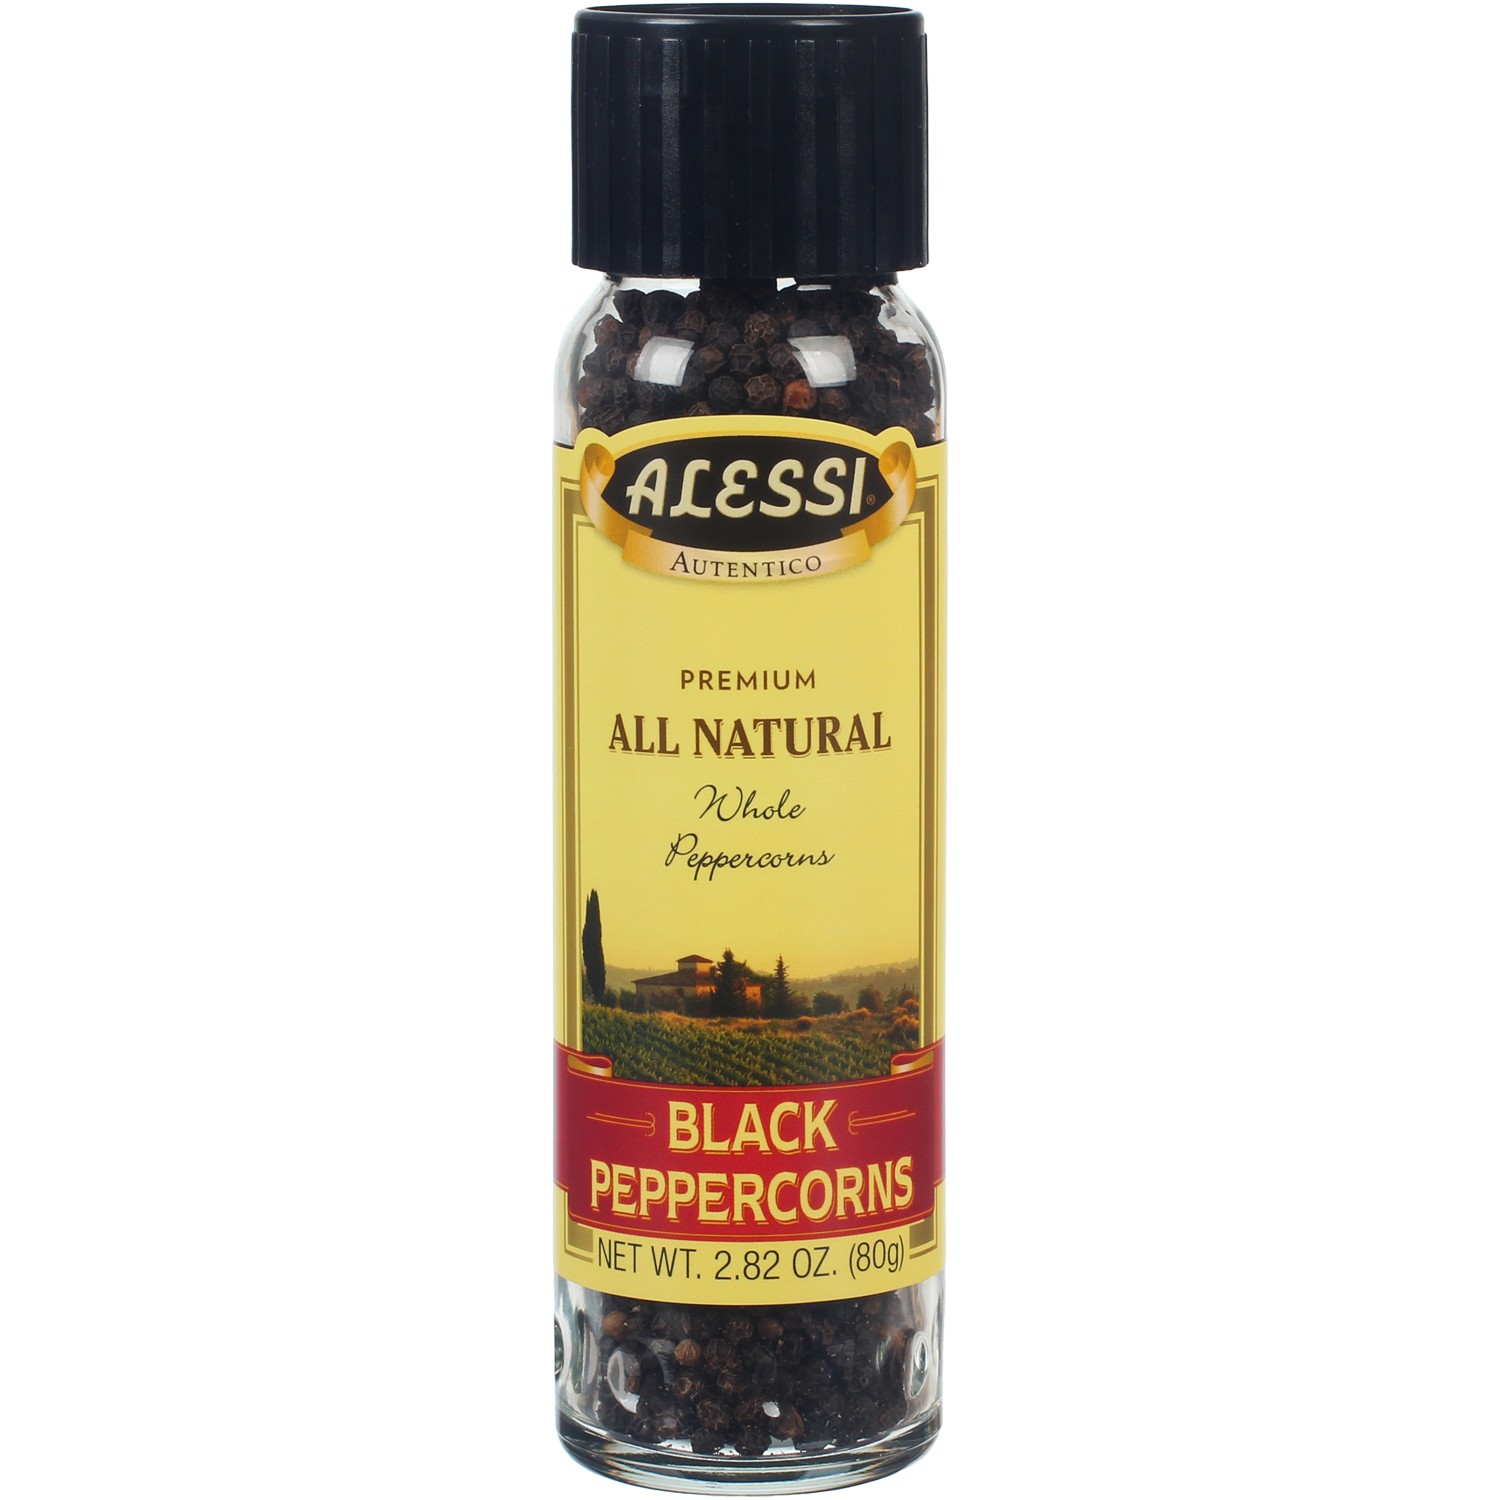 Alessi Black Pepper Grinder - Alessi Foods